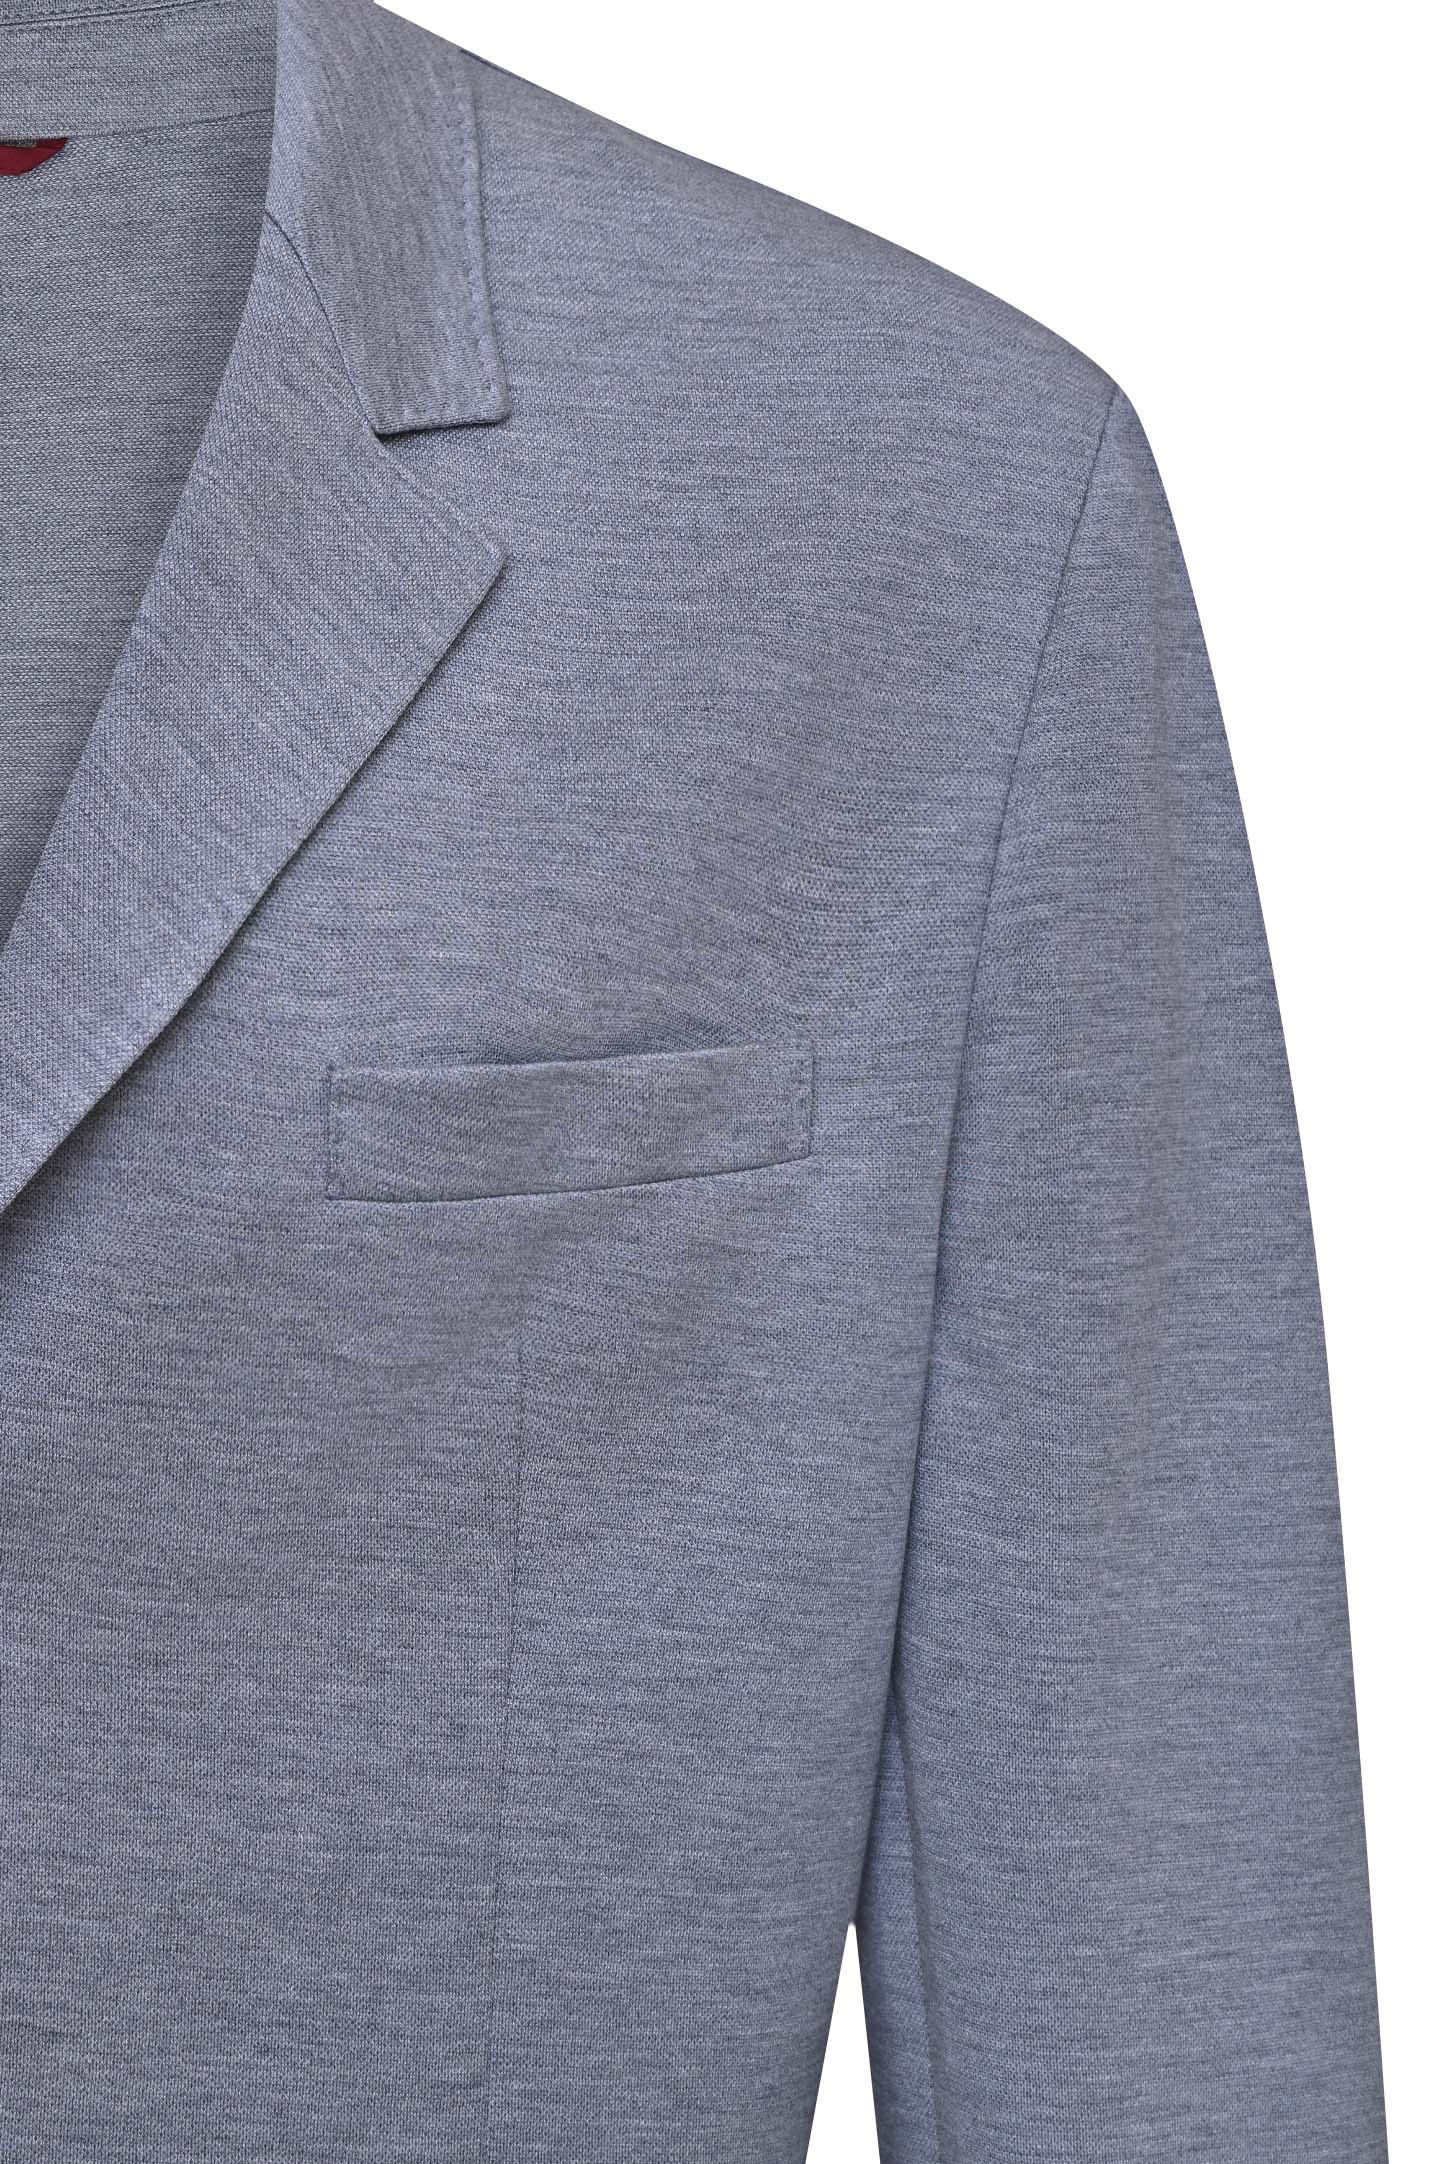 Пиджак BRUNELLO  CUCINELLI MQ8588J01, цвет: Серый, Мужской